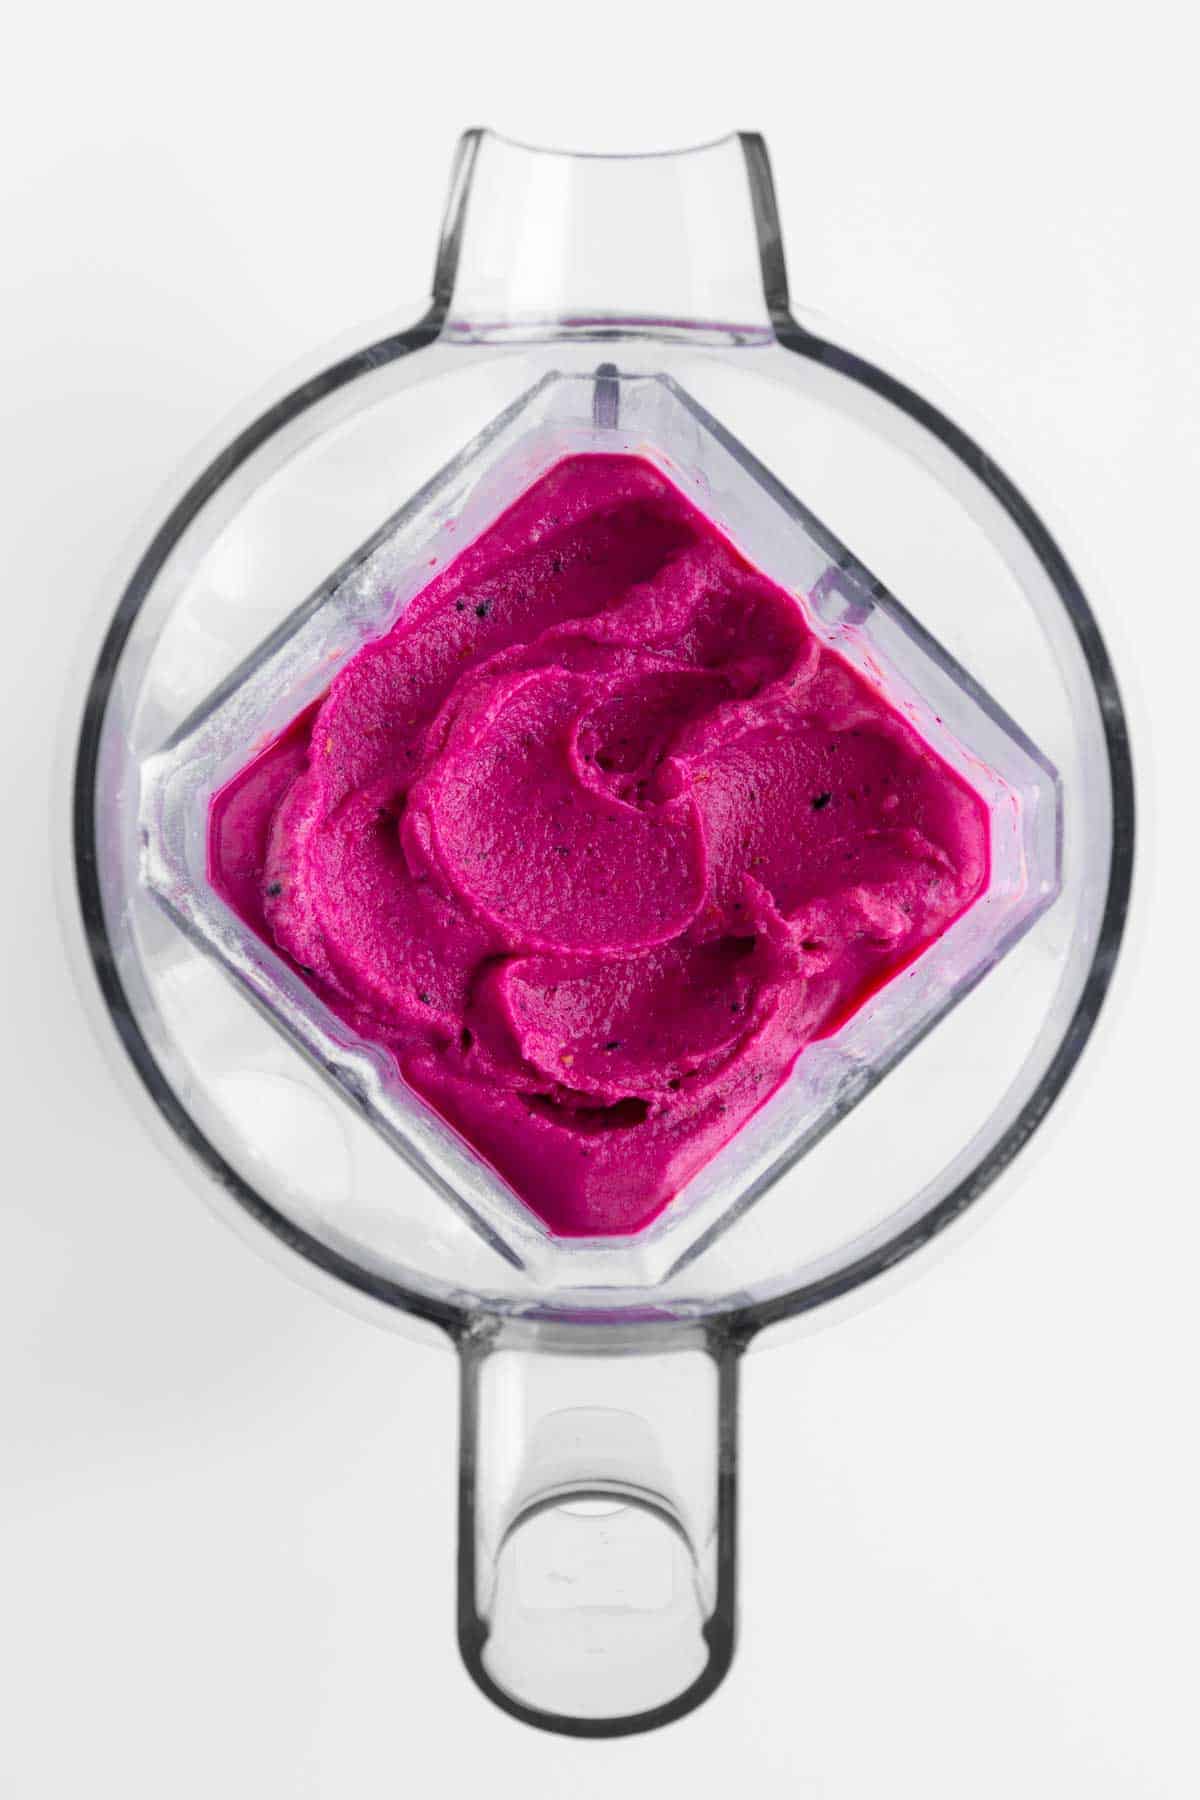 a pitaya smoothie inside a vitamix blender